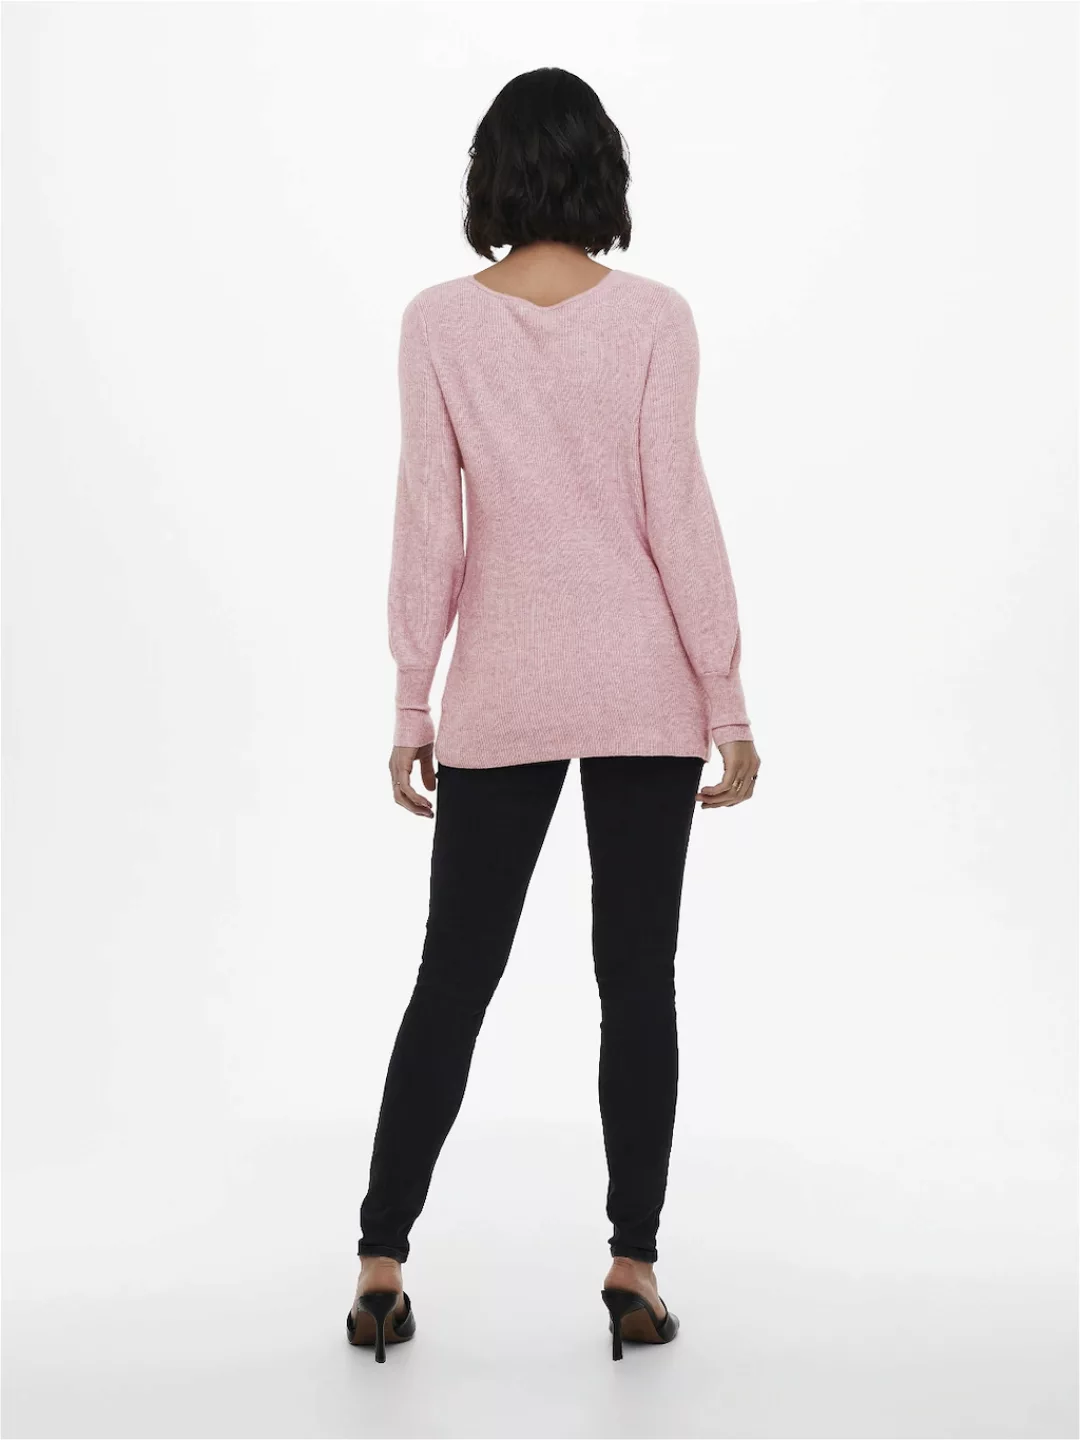 ONLY V-Ausschnitt-Pullover ONLATIA L/S V-NECK CUFF KNT günstig online kaufen